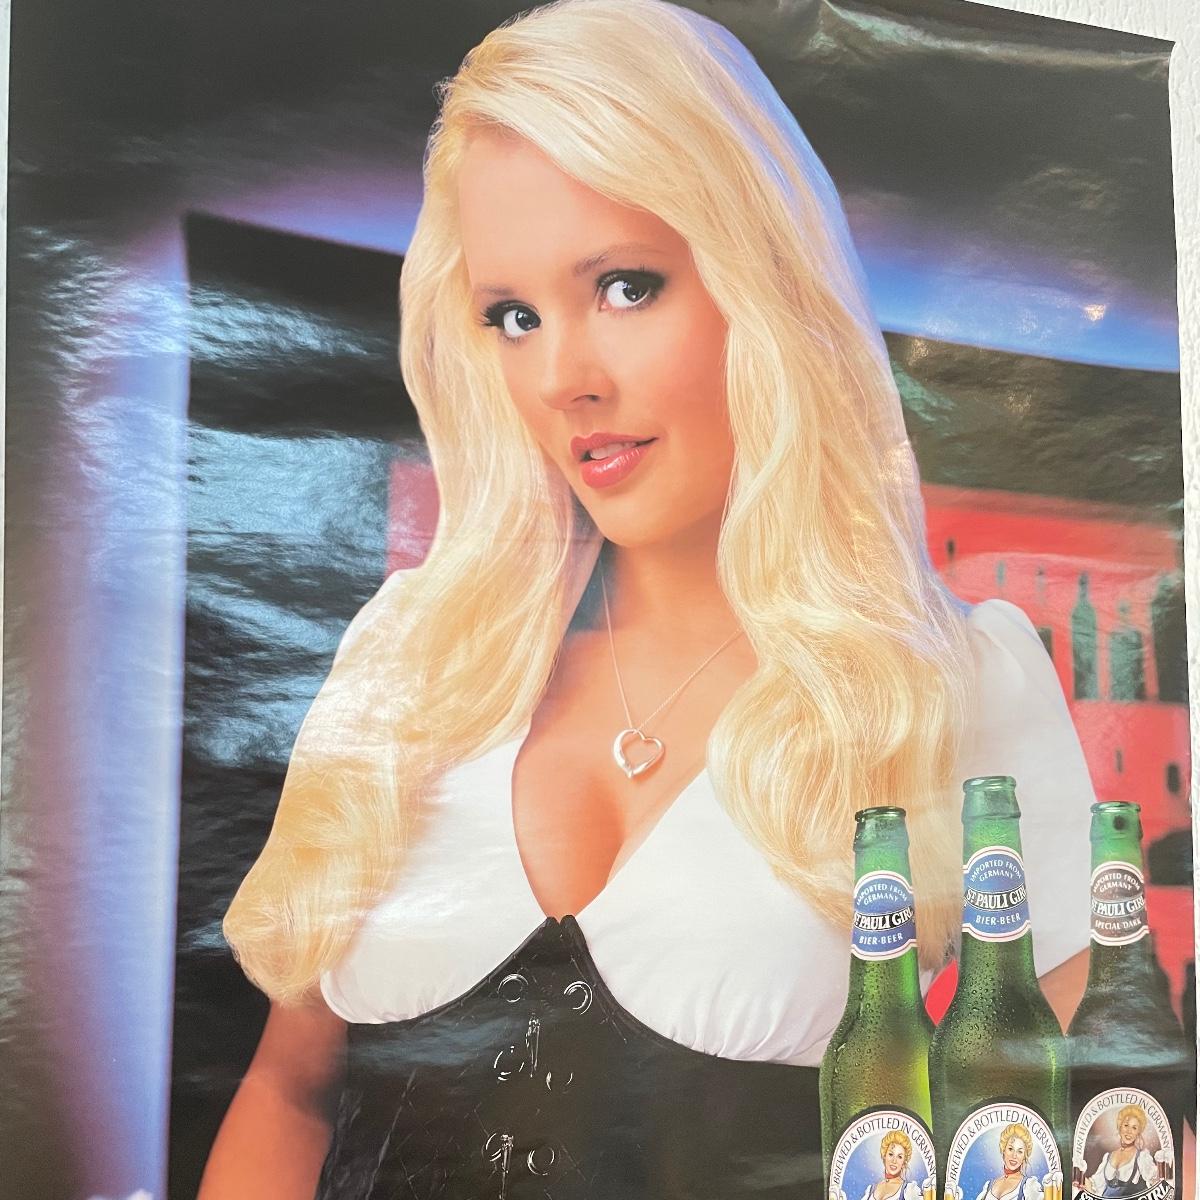 “st Pauli Girl Beer” Stacy Fuson Poster